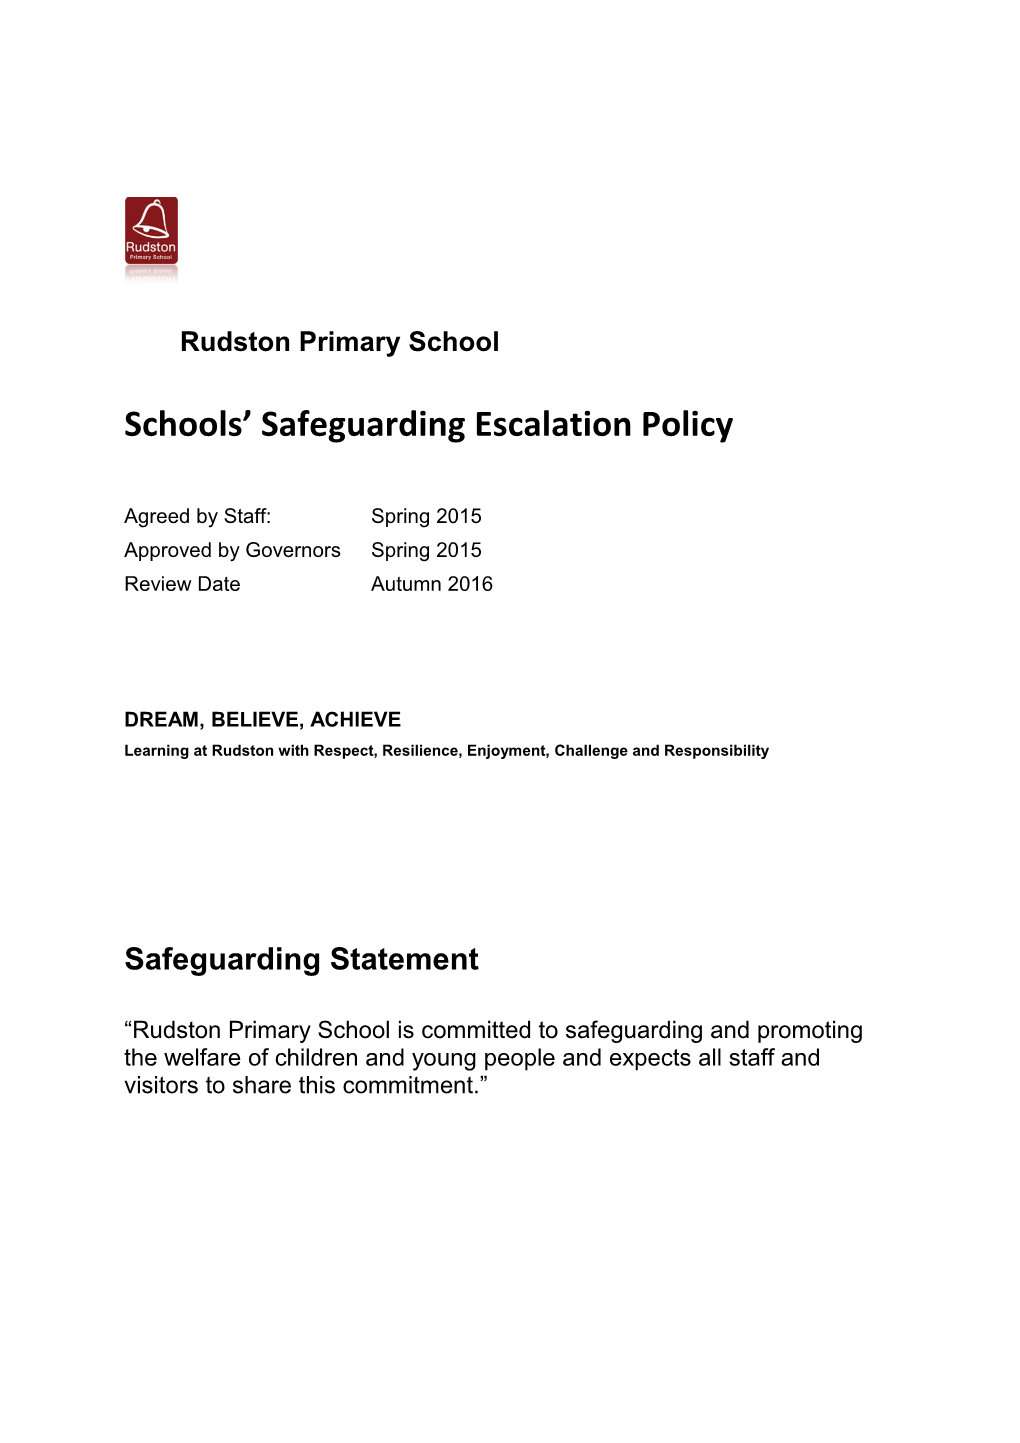 Schools Safeguarding Escalation Policy